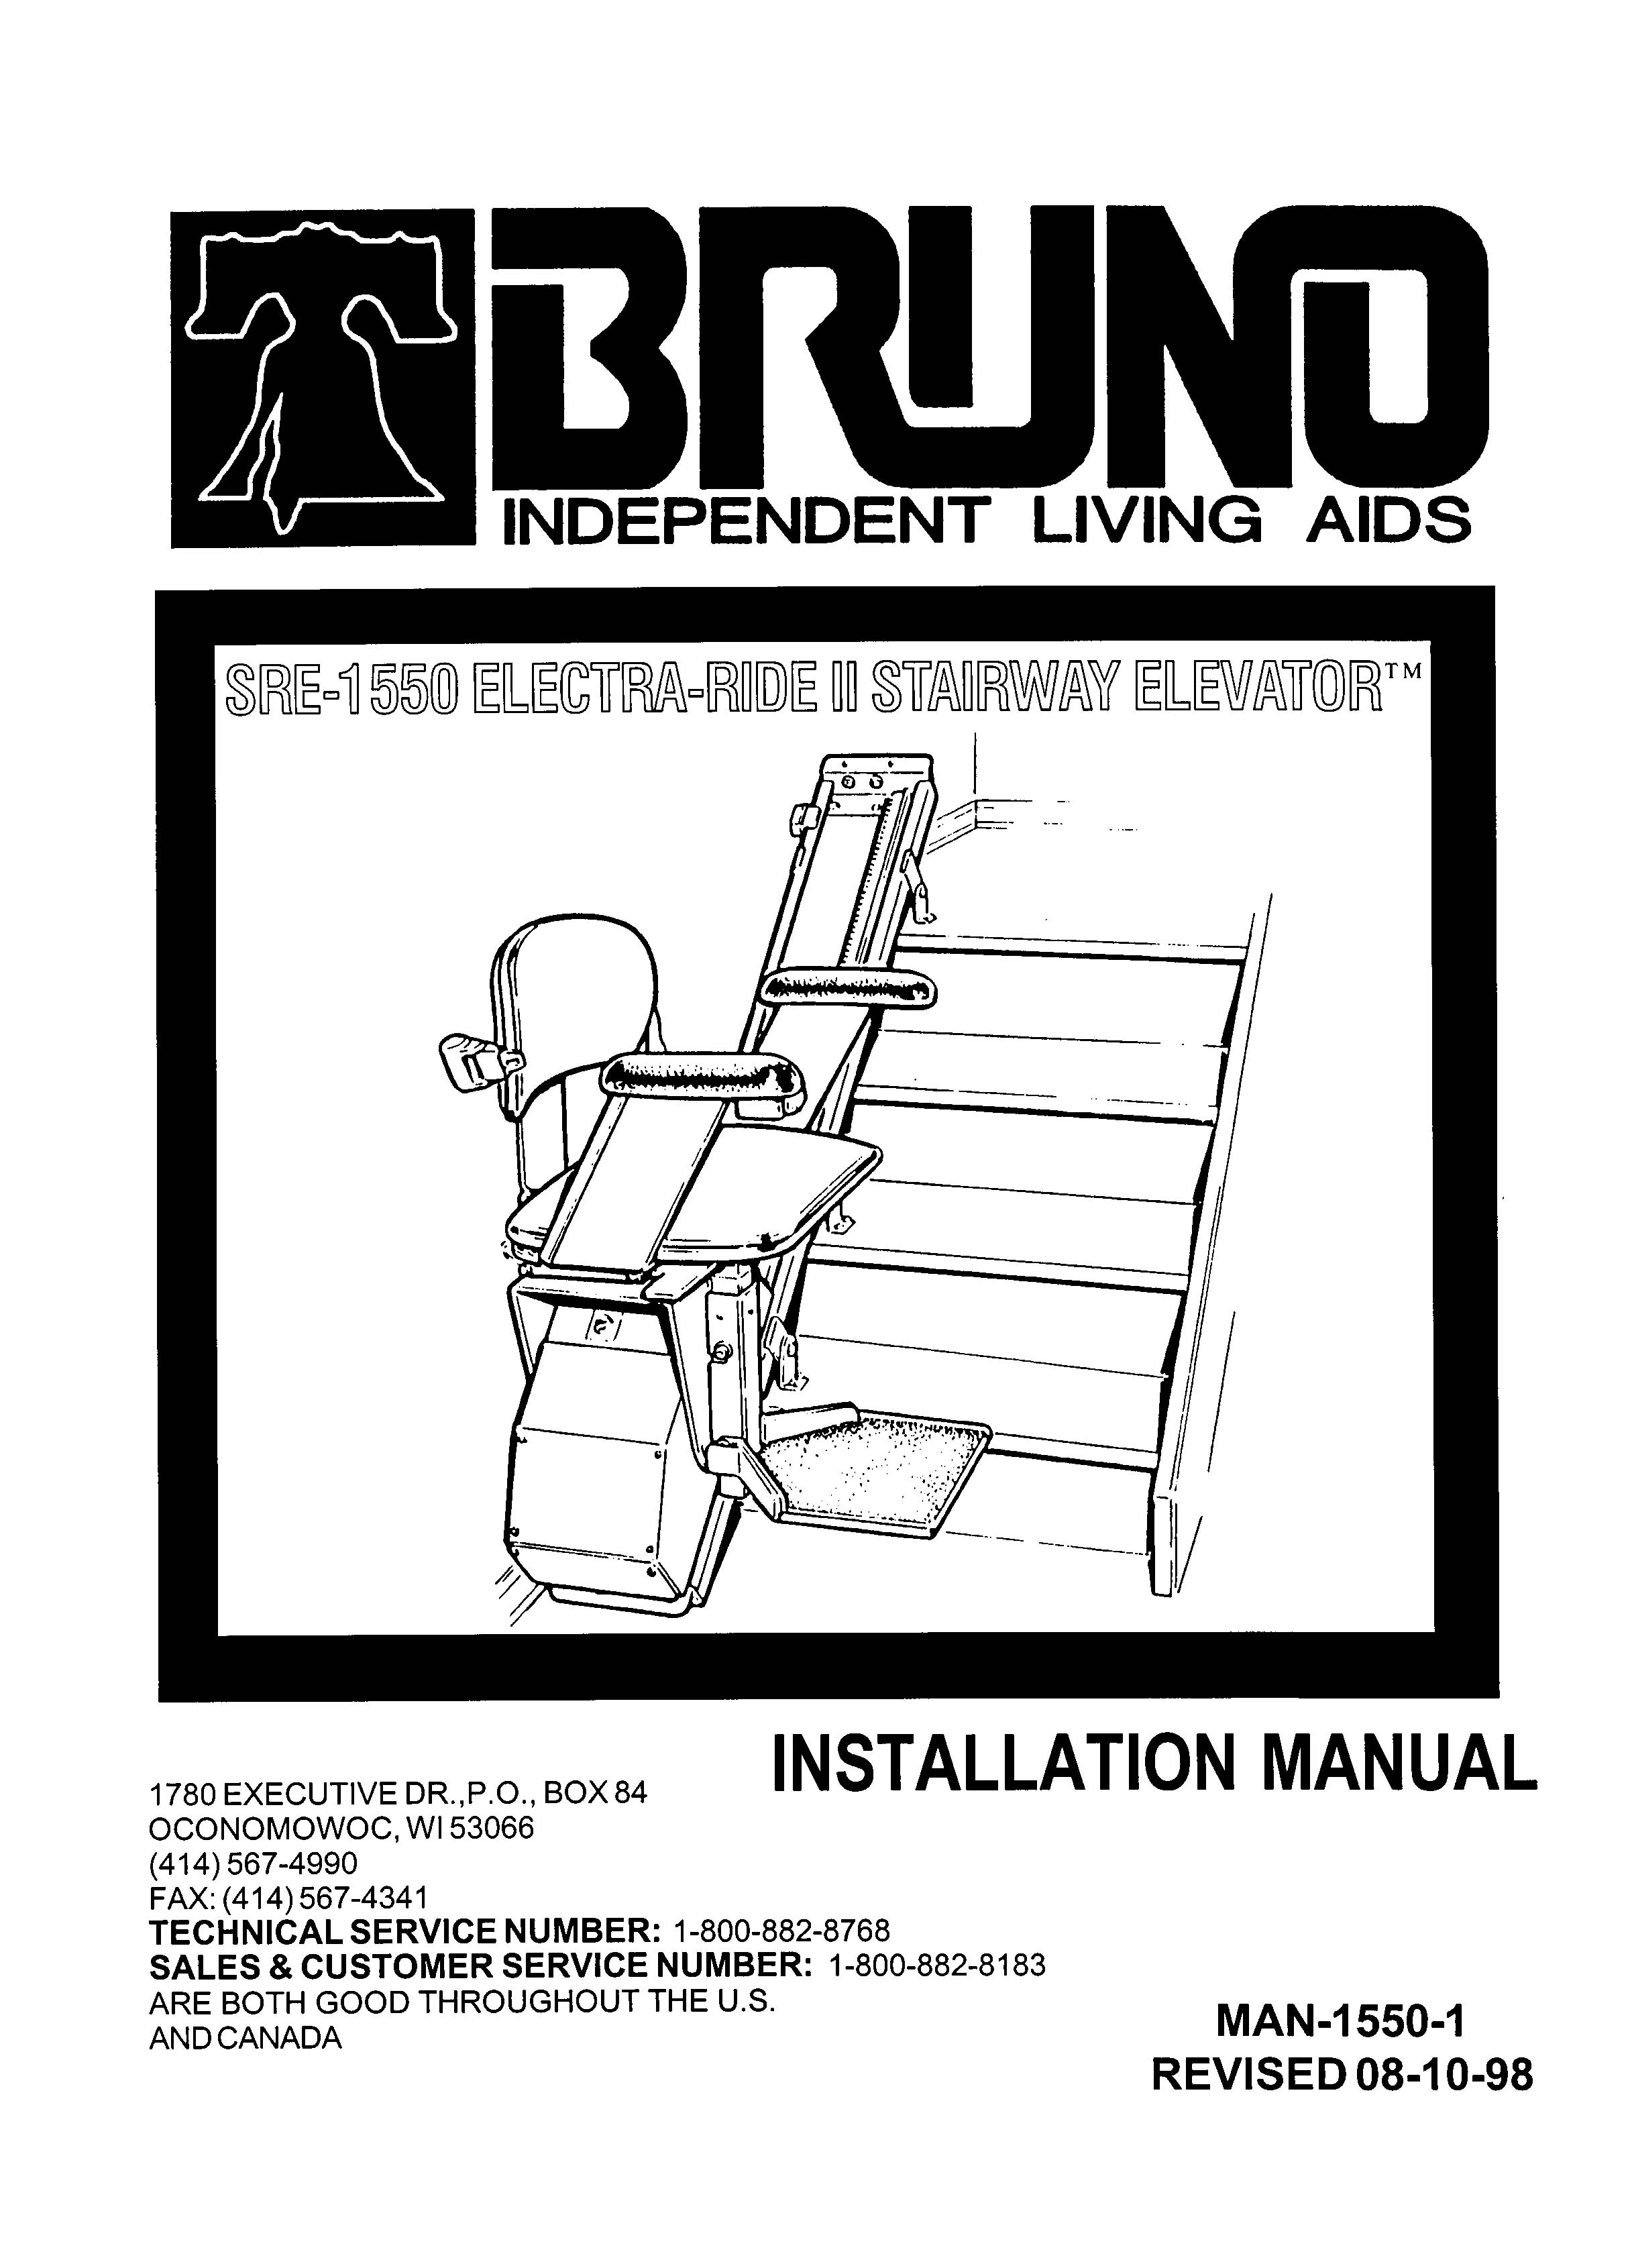 Stairway Elevator Remote Control User Manual